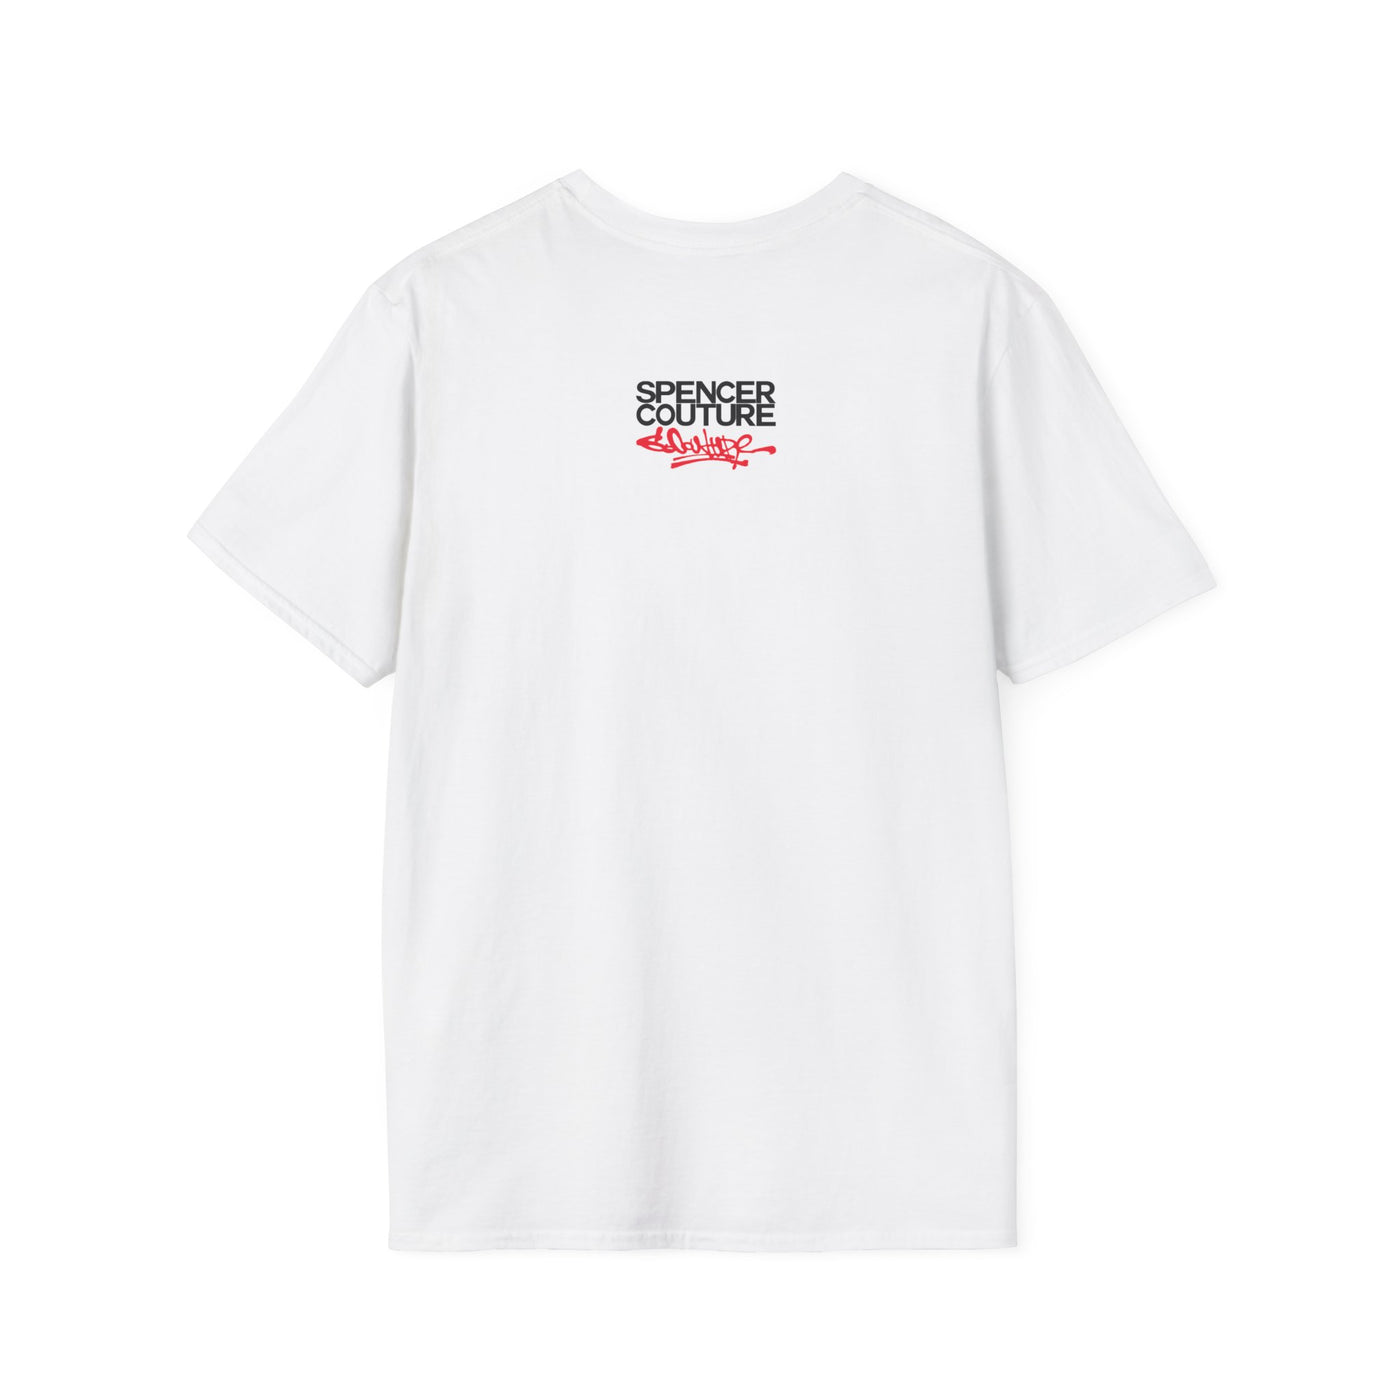 Rolling Stones Artist T-Shirt